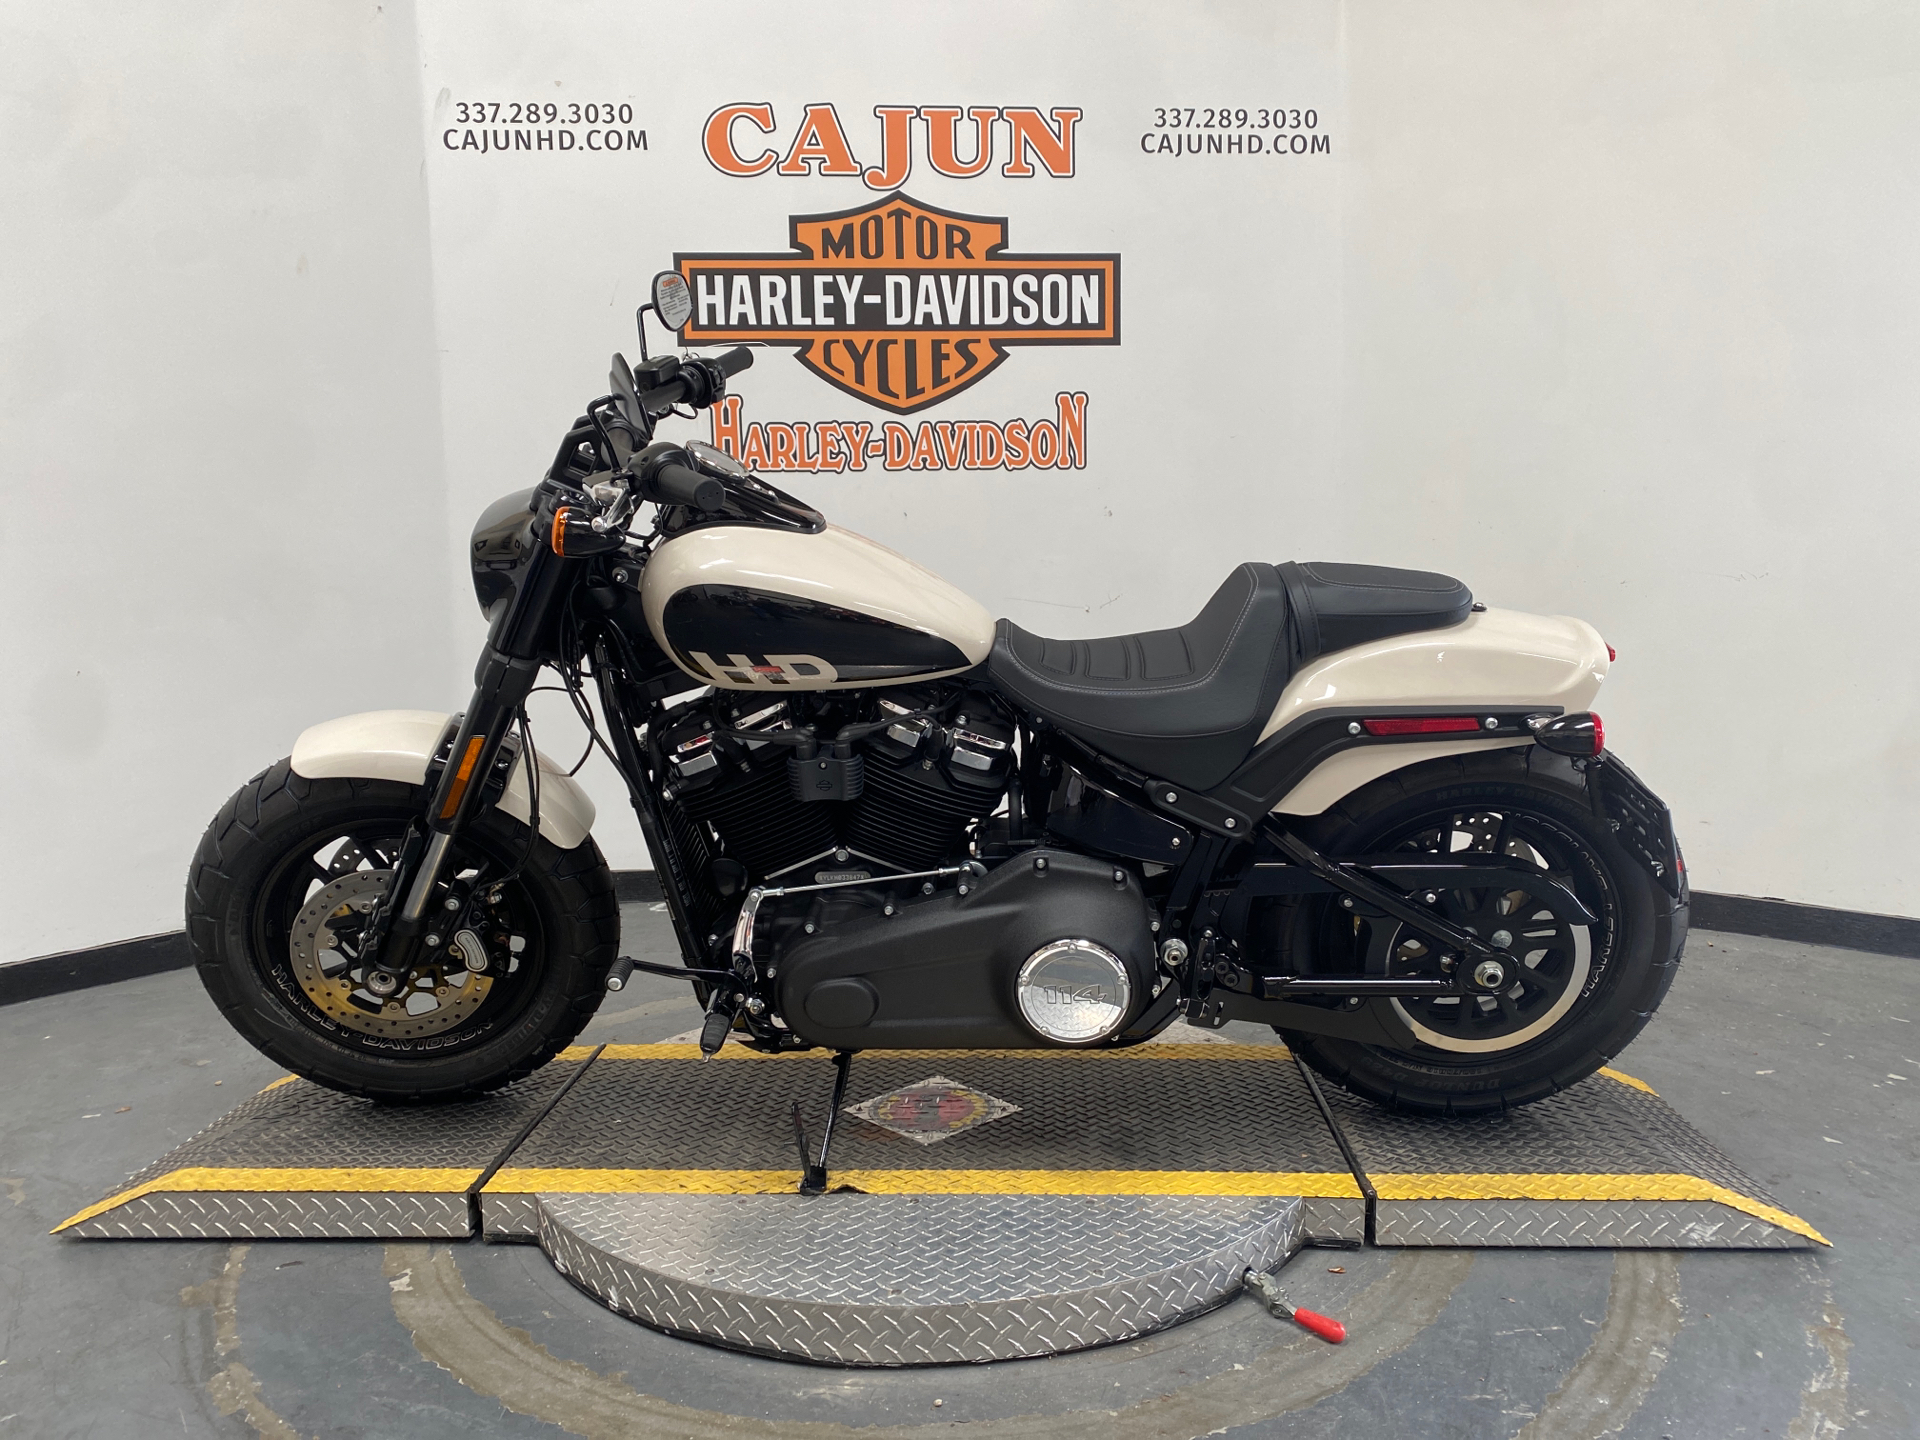 2022 Harley Fat Bob for sale - Photo 2